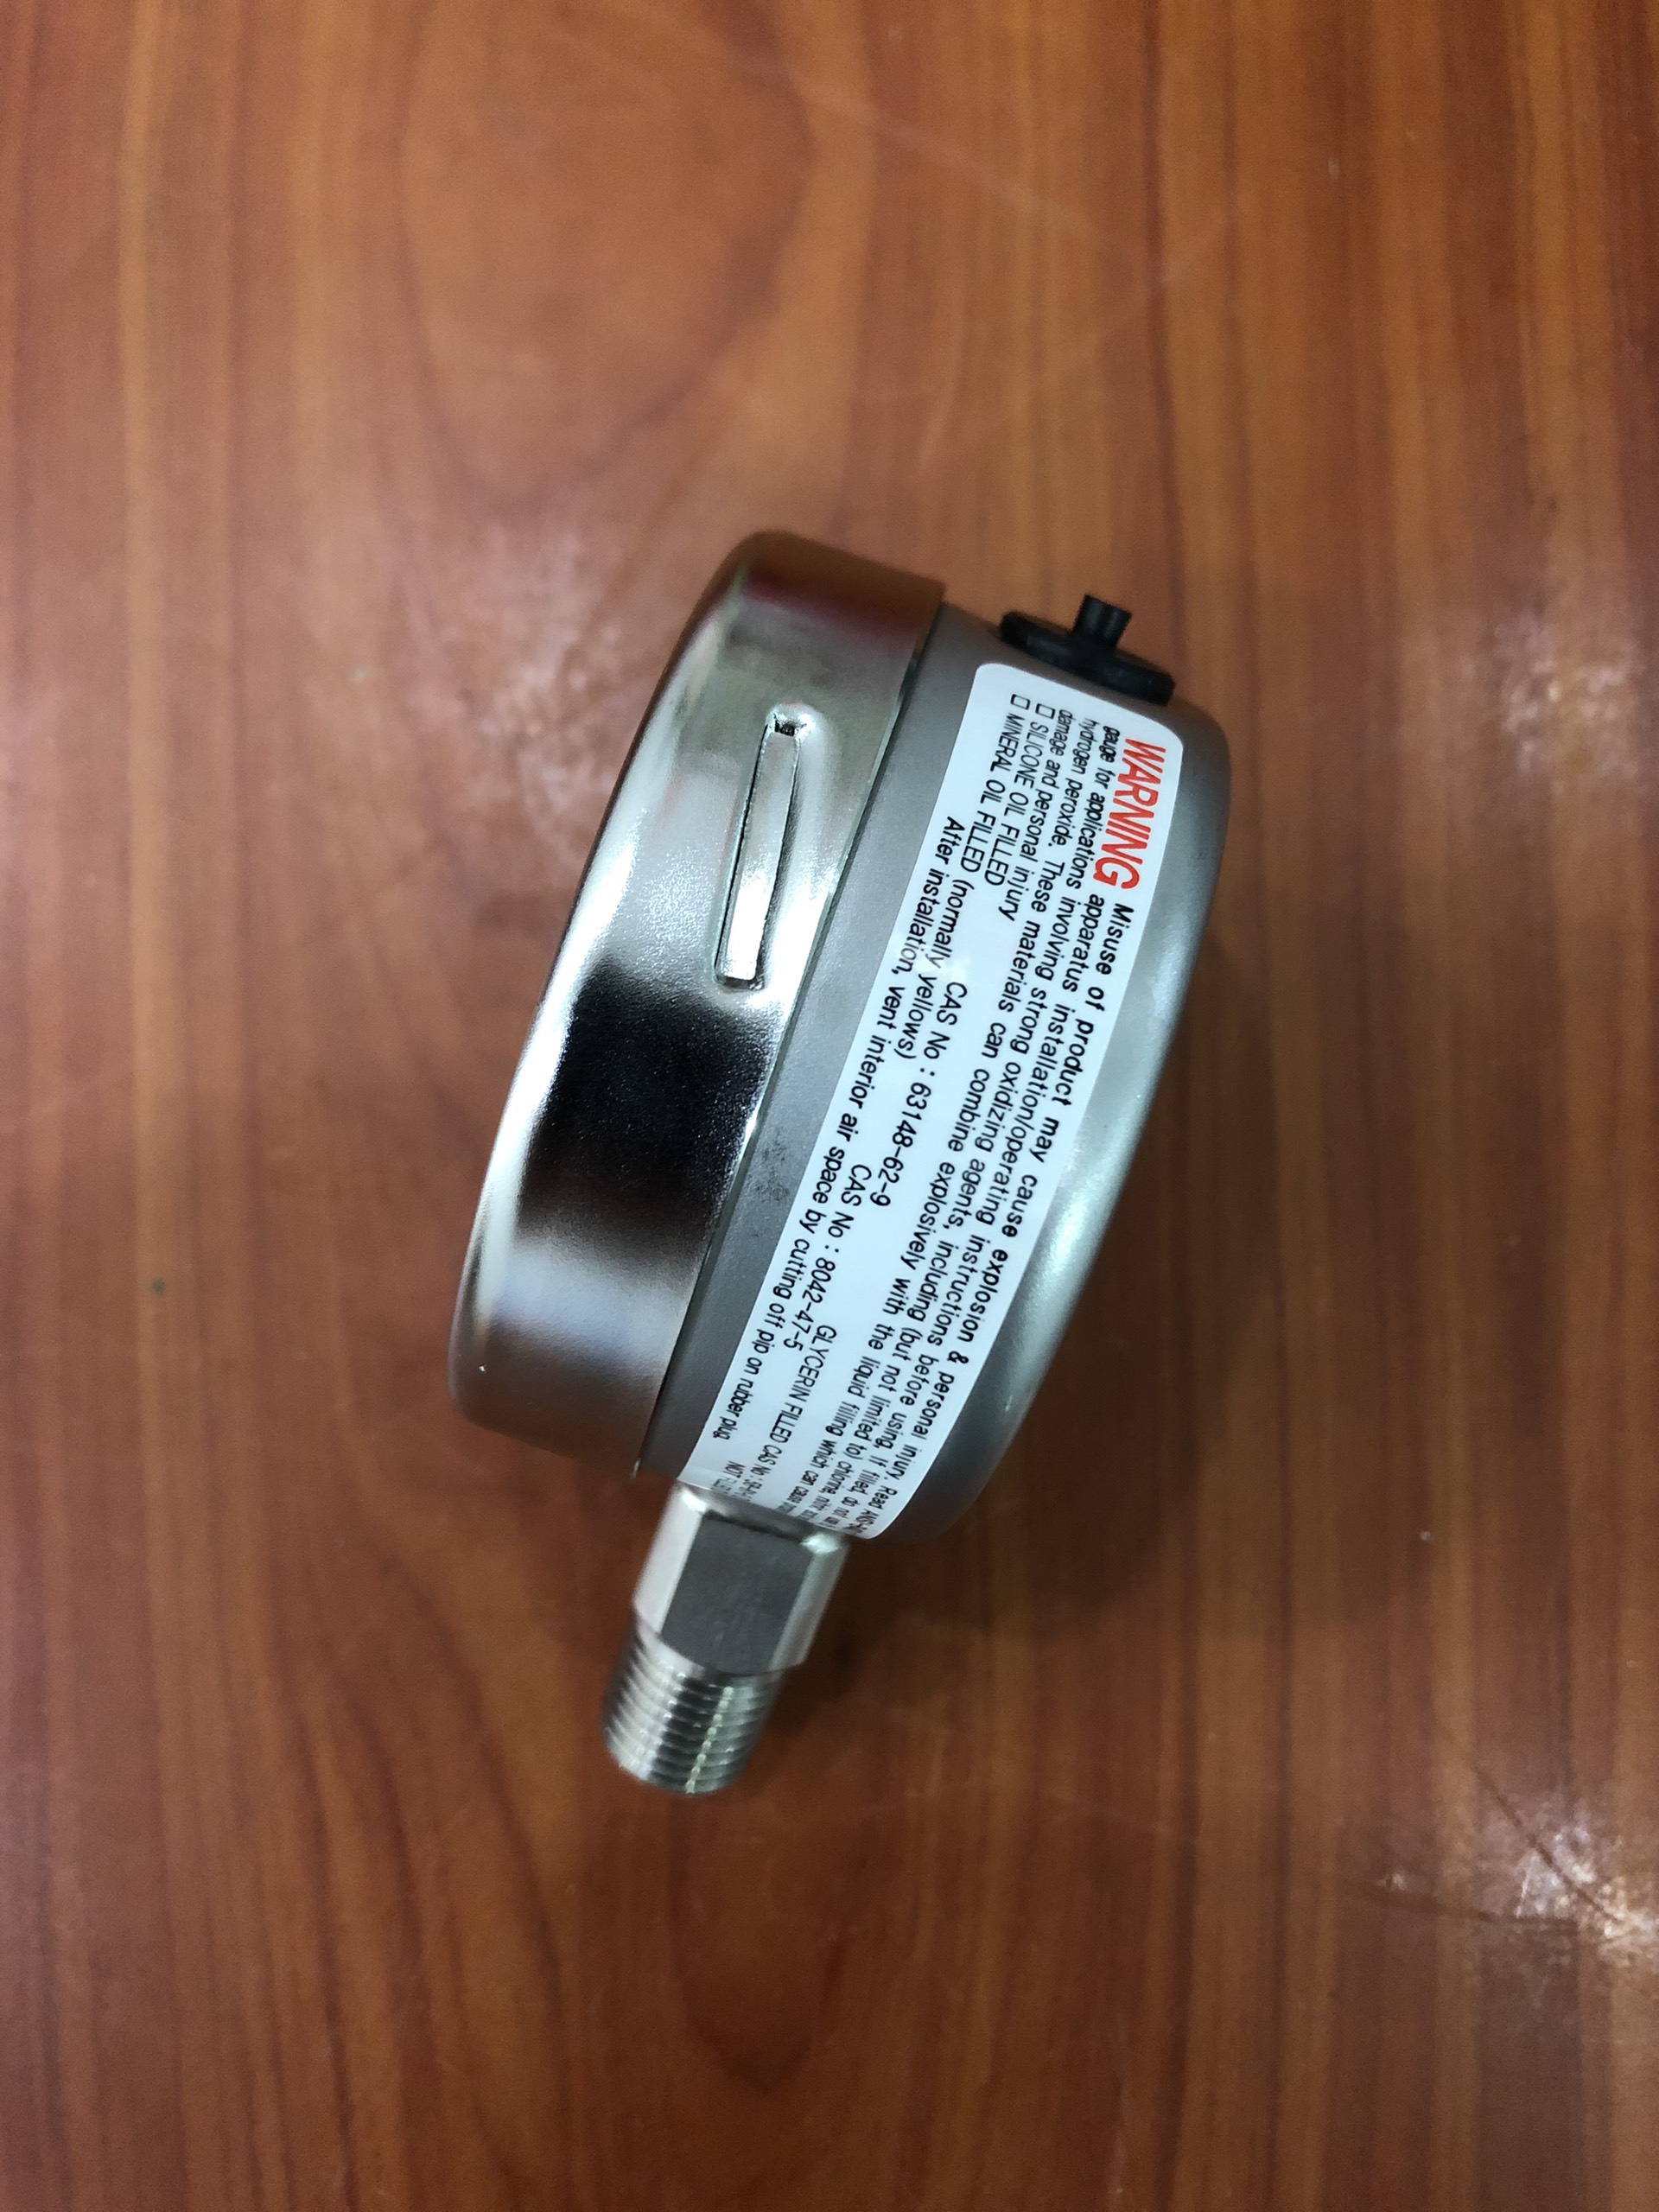 Dụng cụ đo áp suất P252-063A - dãy đo bar